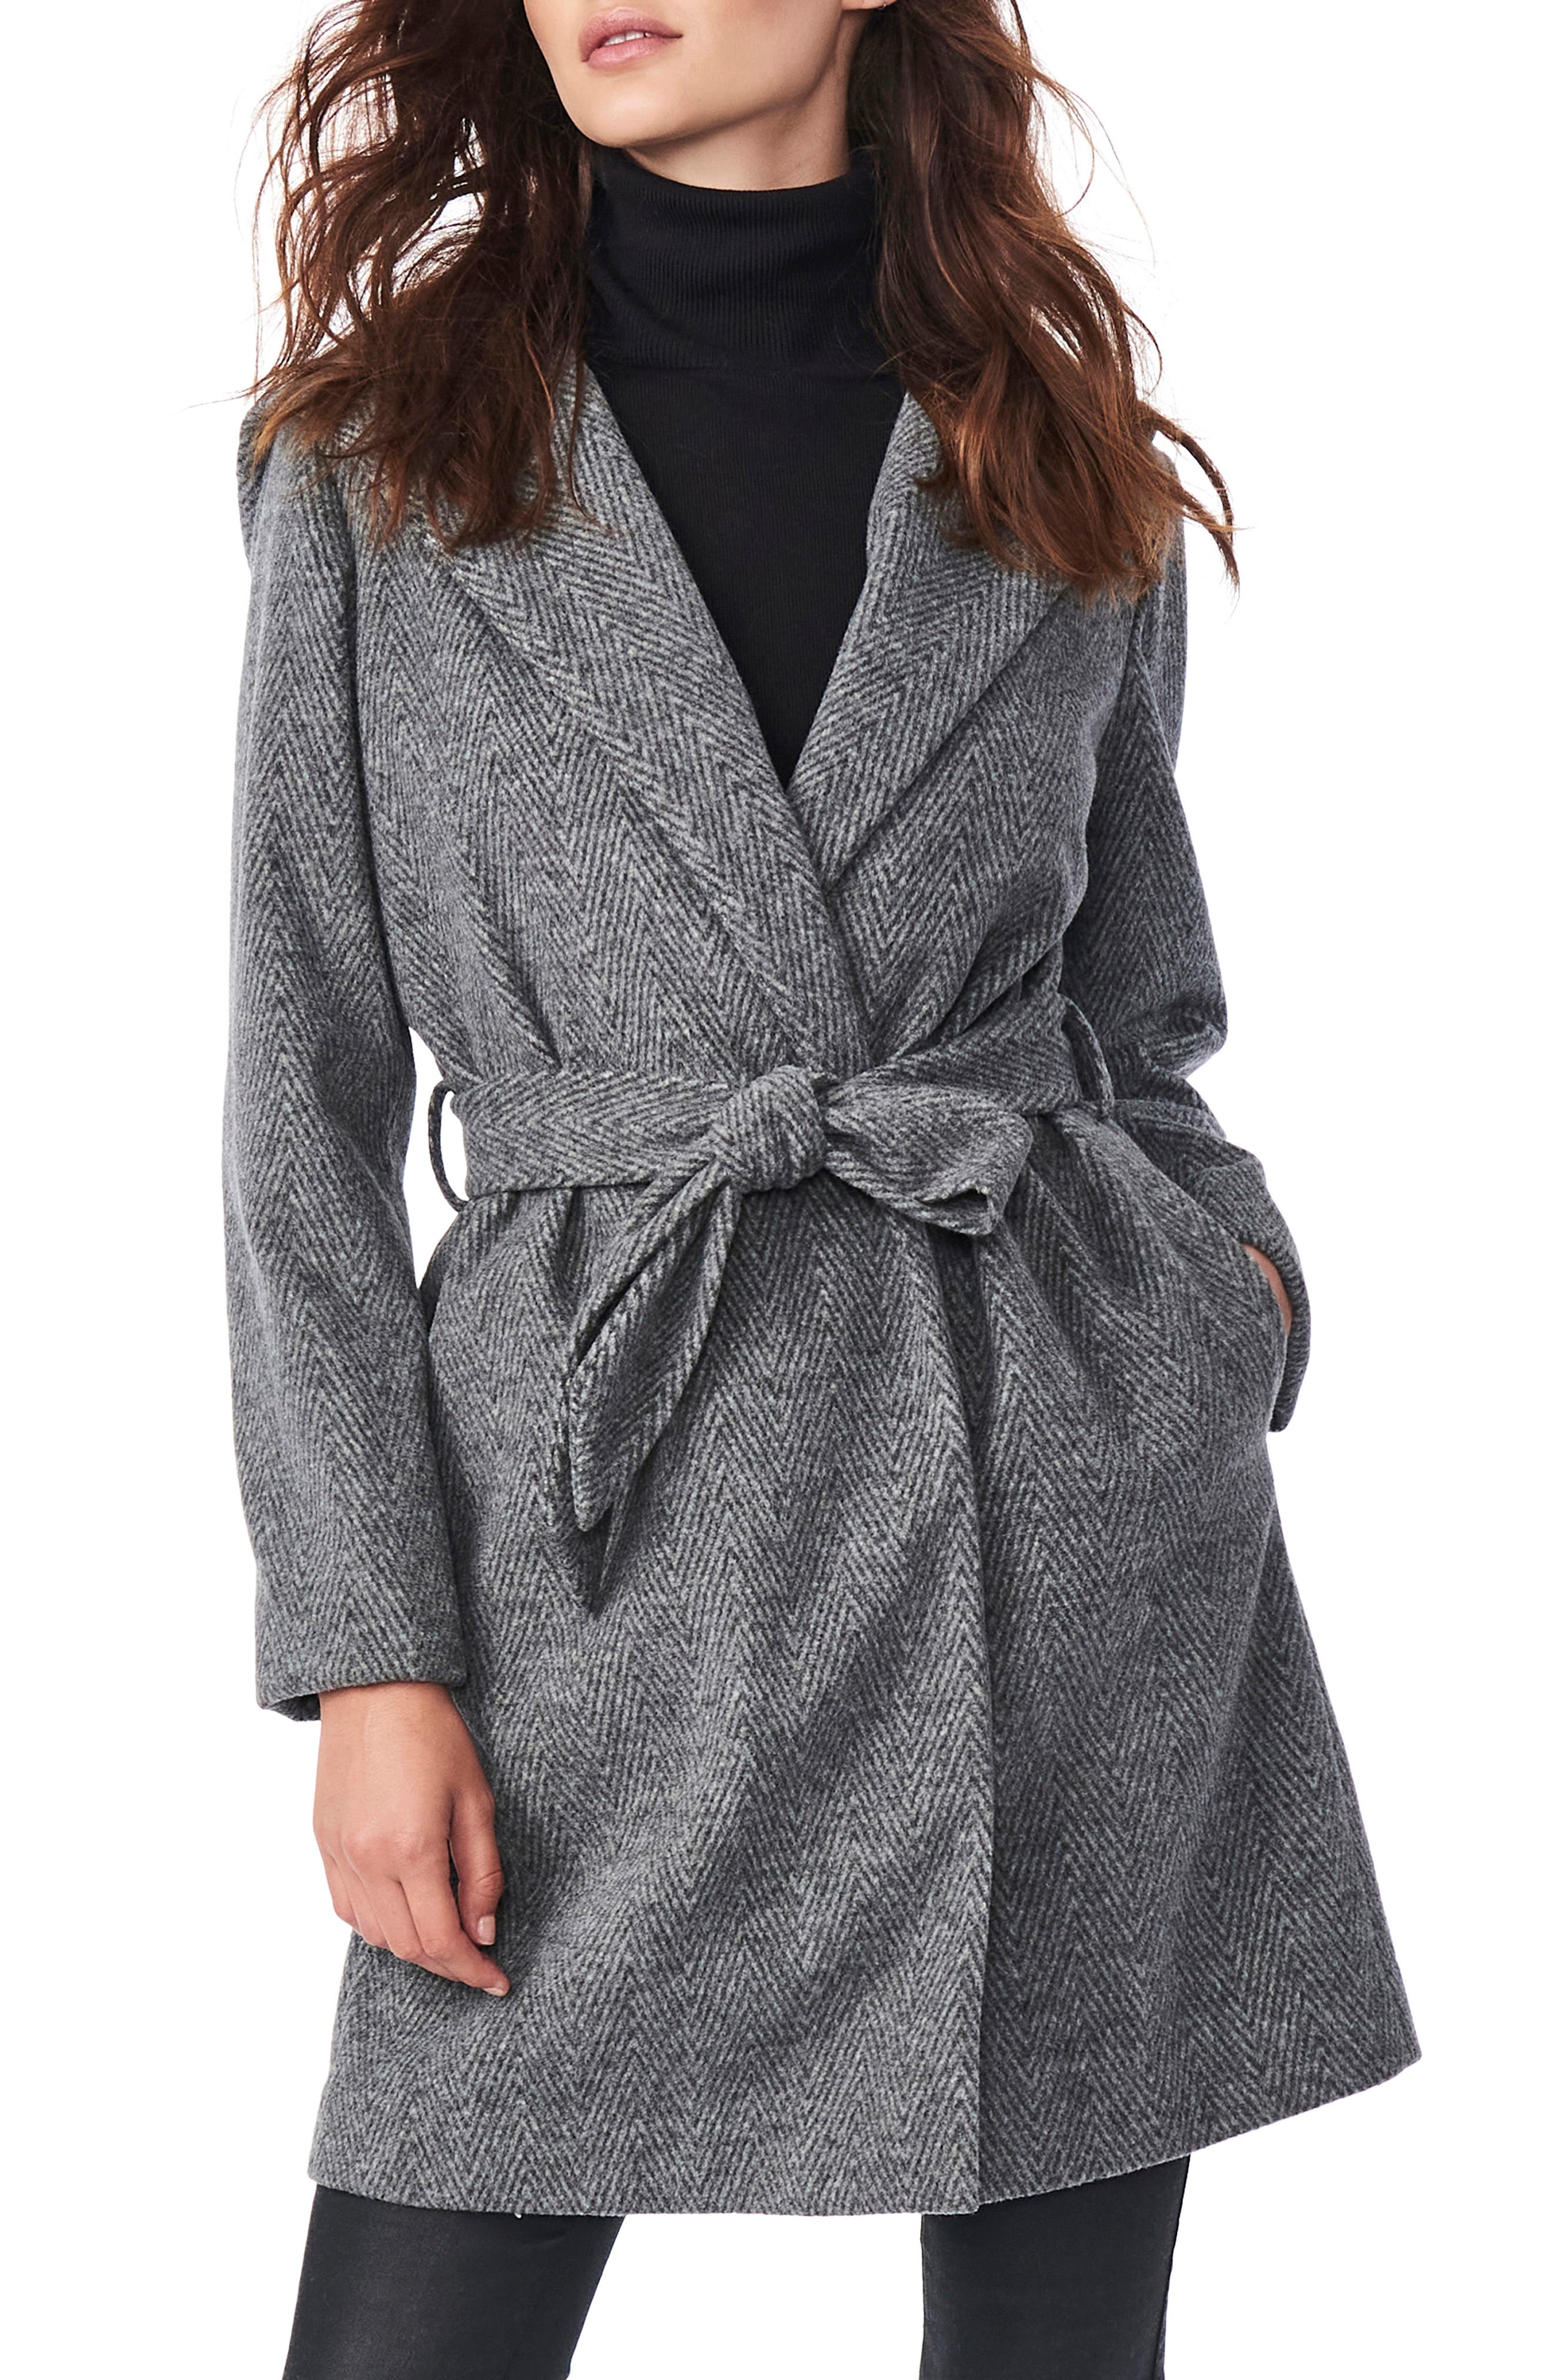 gray wrap coat